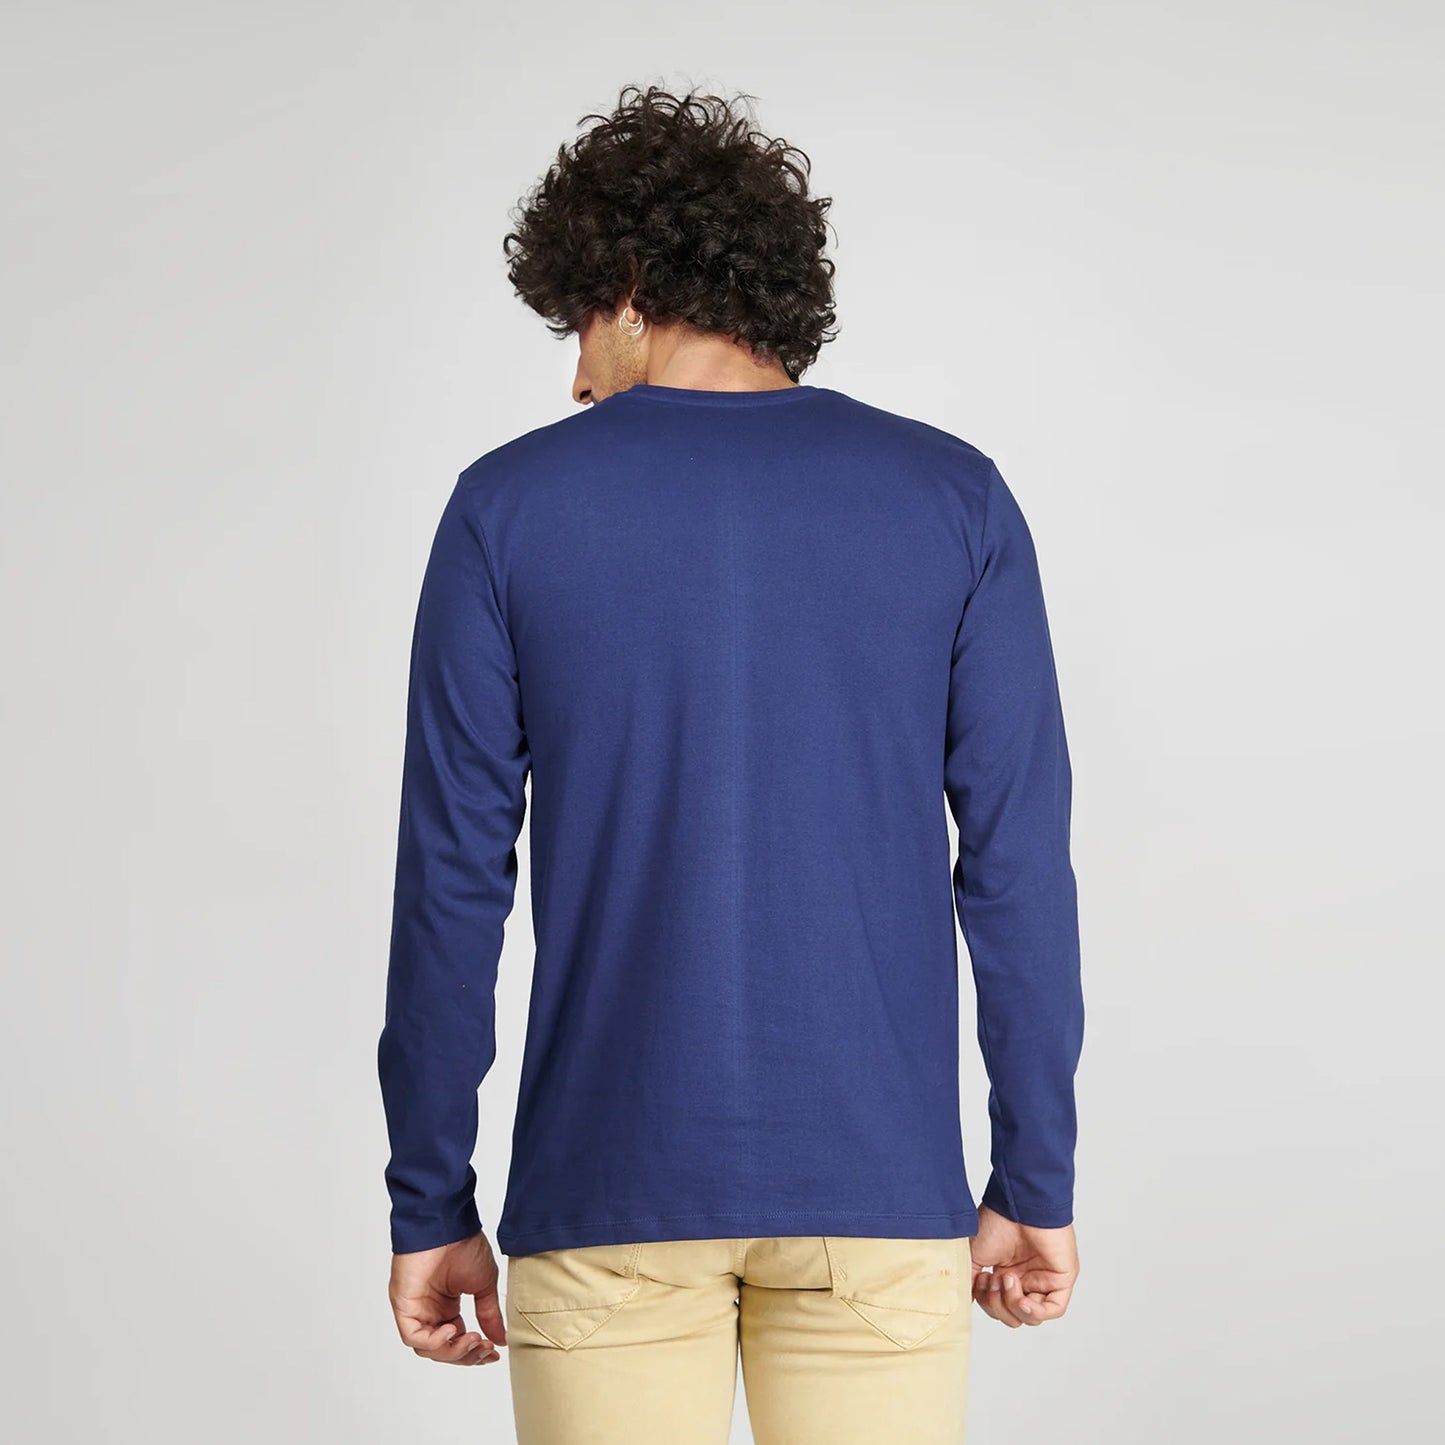 Basic Royal Blue Full Sleeves T-Shirt